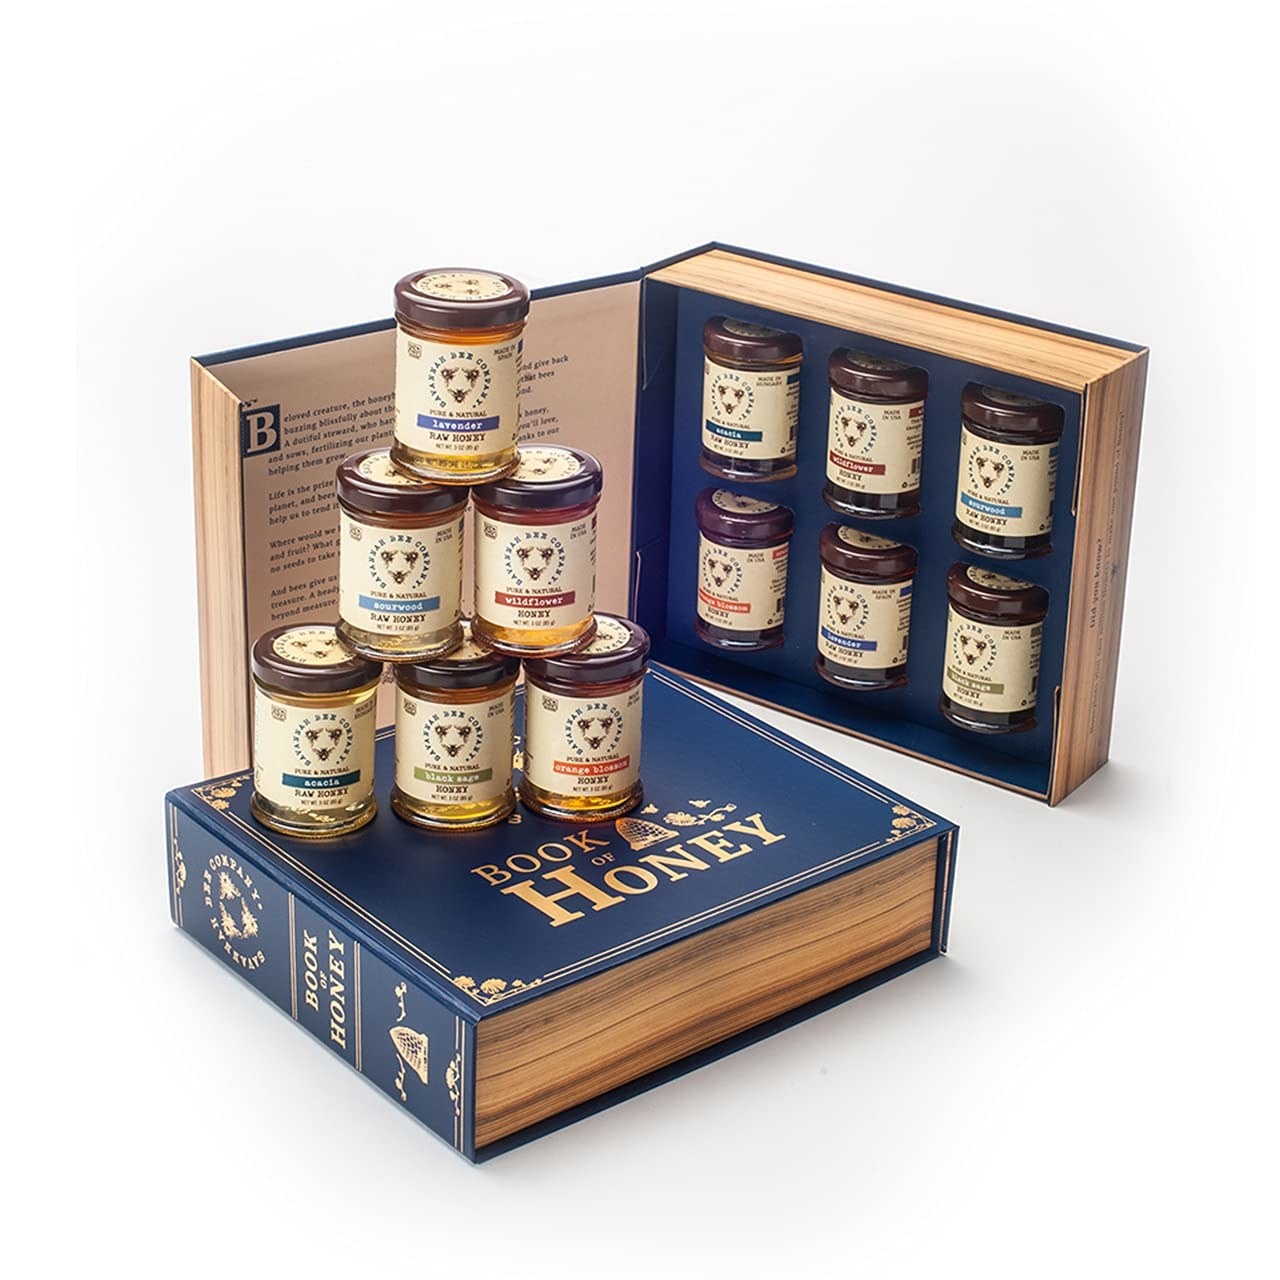 The six honey jars in a box shaped like a book